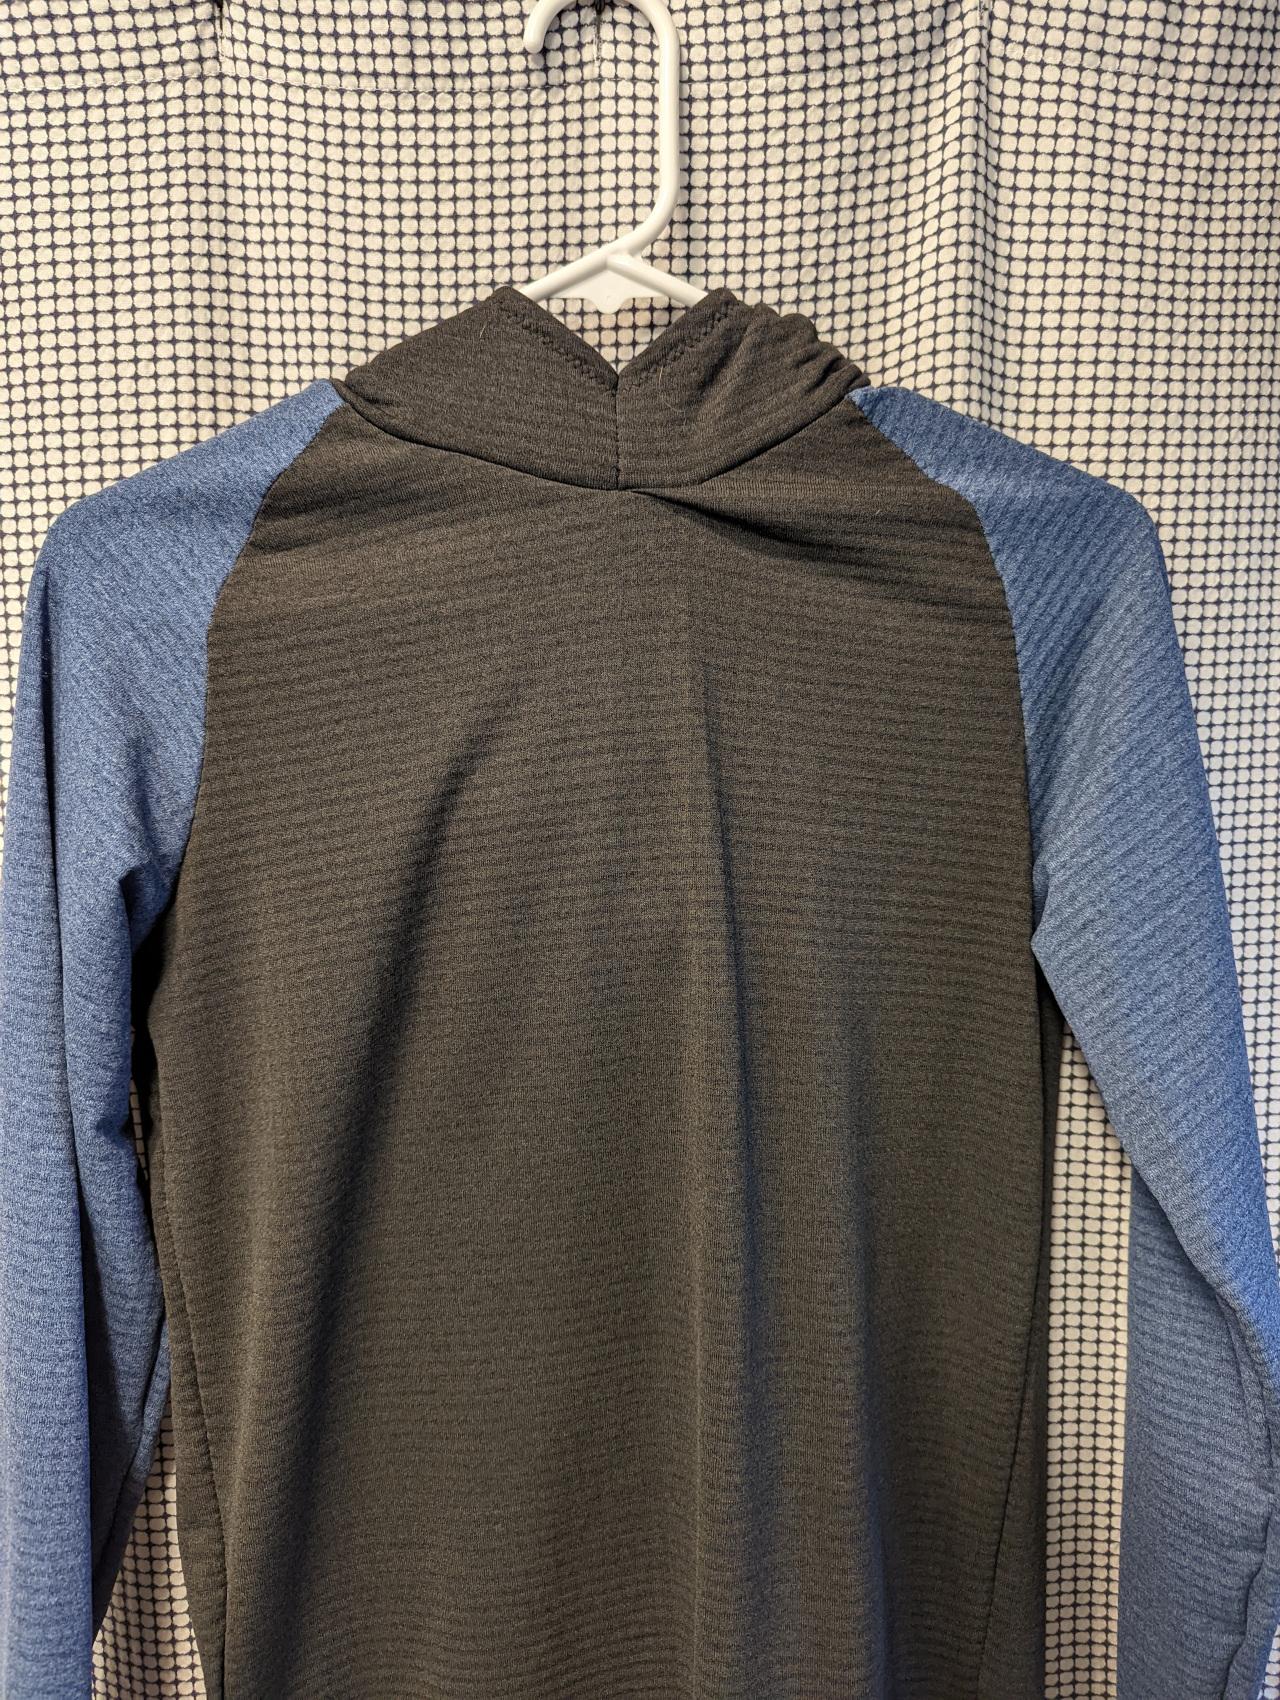 New gridded fleece hoodie top - Backpacking Light